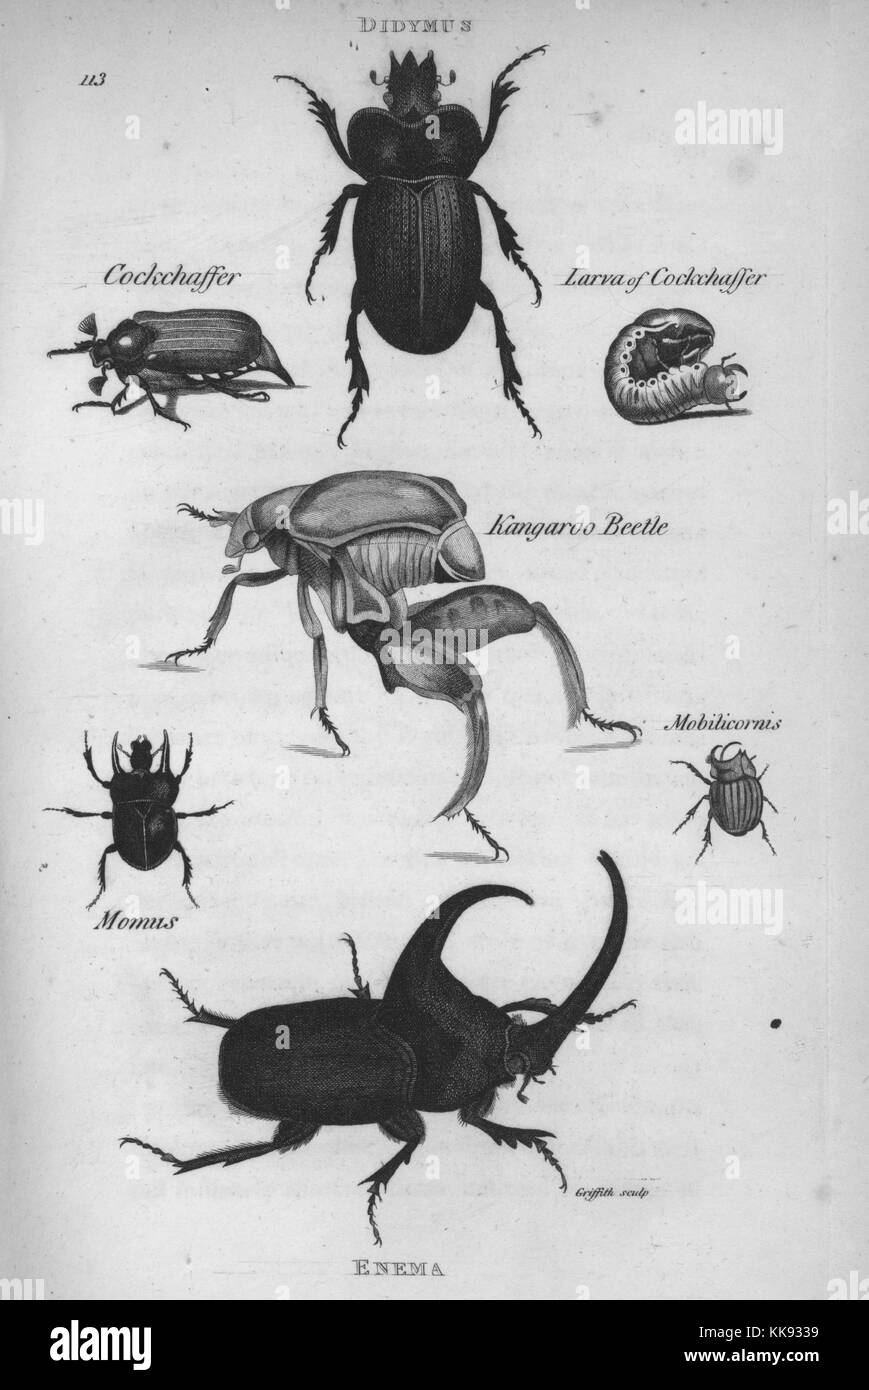 Didymus, Cockchaffer, Larva of Cockchaffer, Kangaroo Beetle, Momus, Mobilicornis, Enema, 1809. From the New York Public Library. Stock Photo